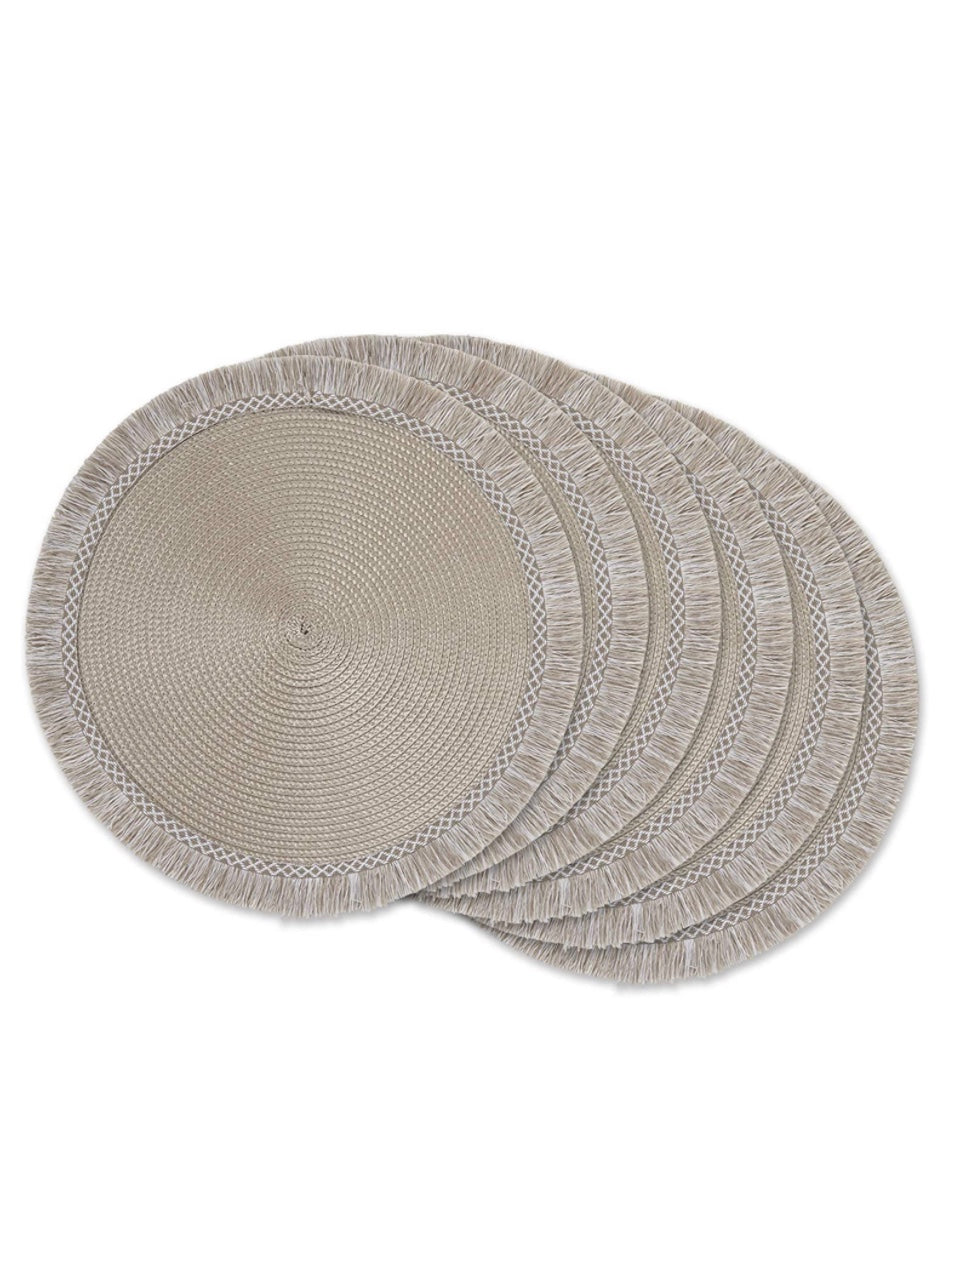 Set of 6 beige round placemats